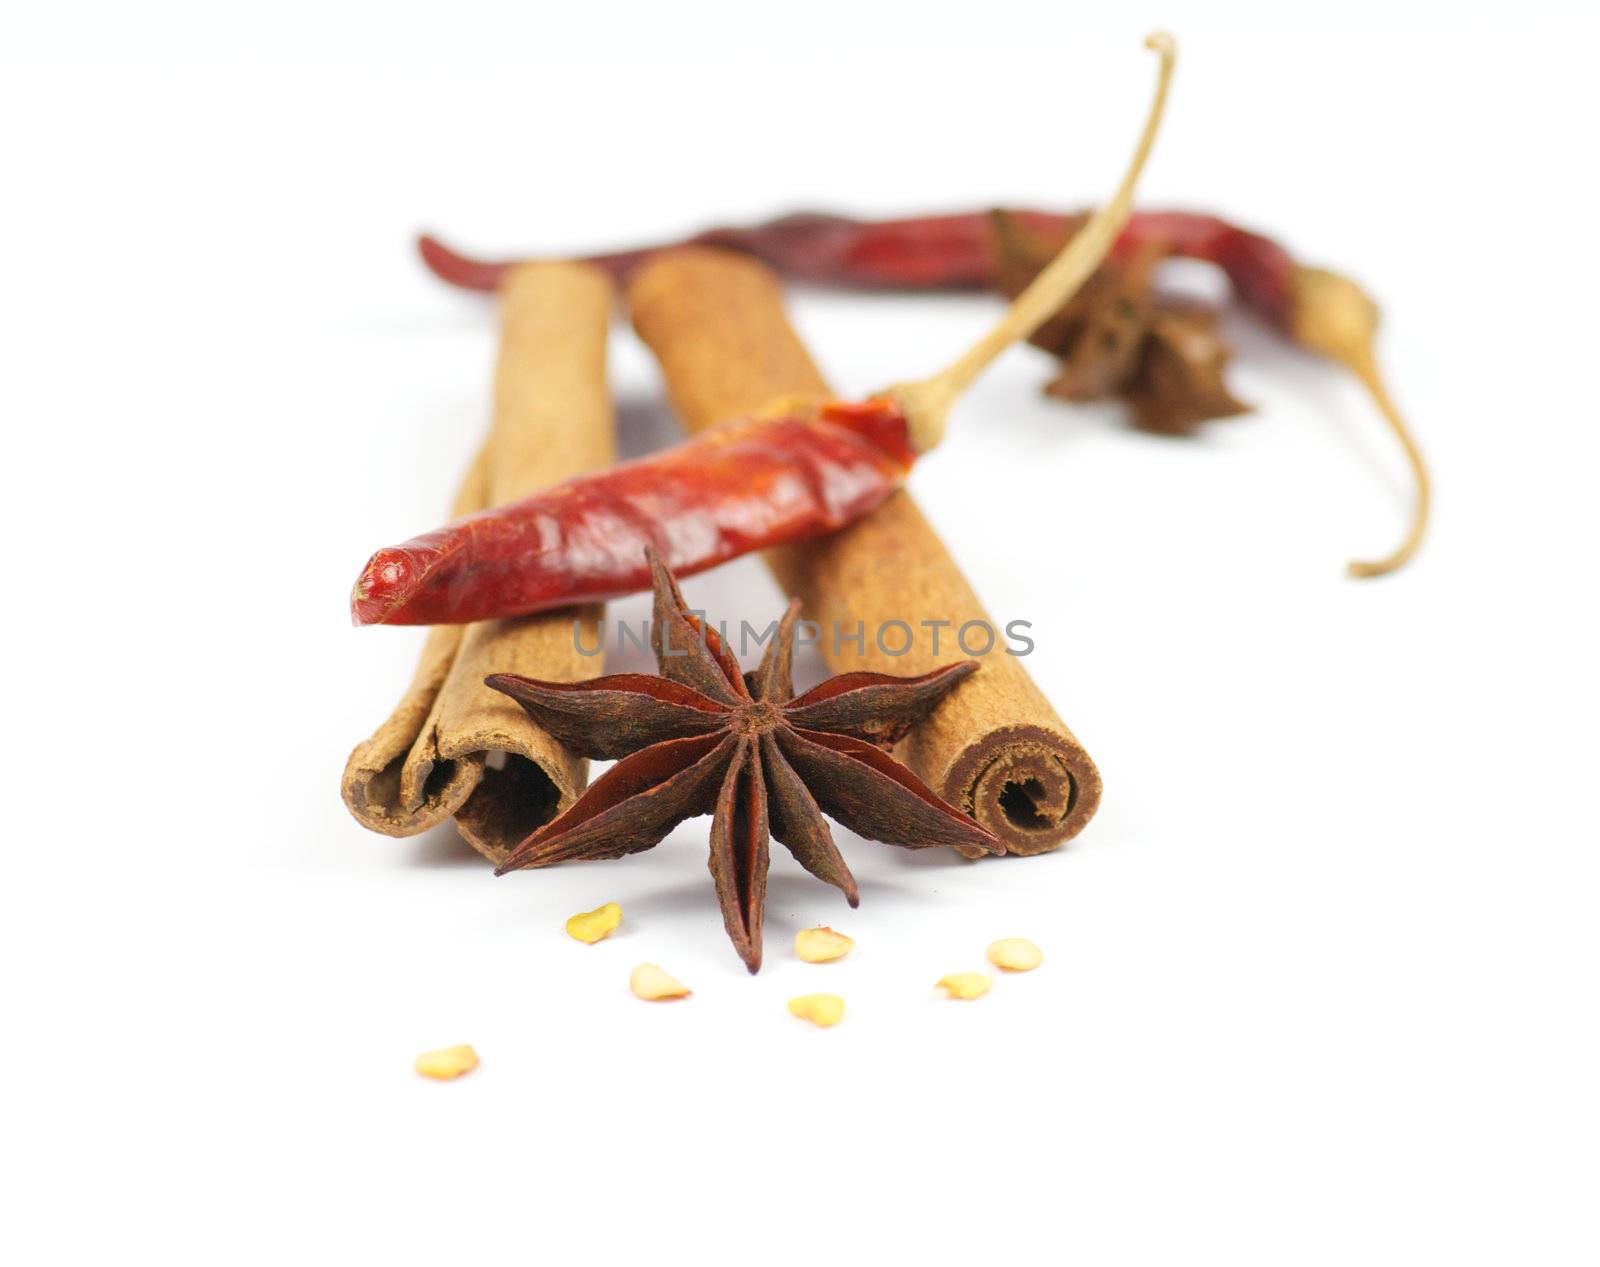 Cinnamon, chili pepper and anise by zhekos